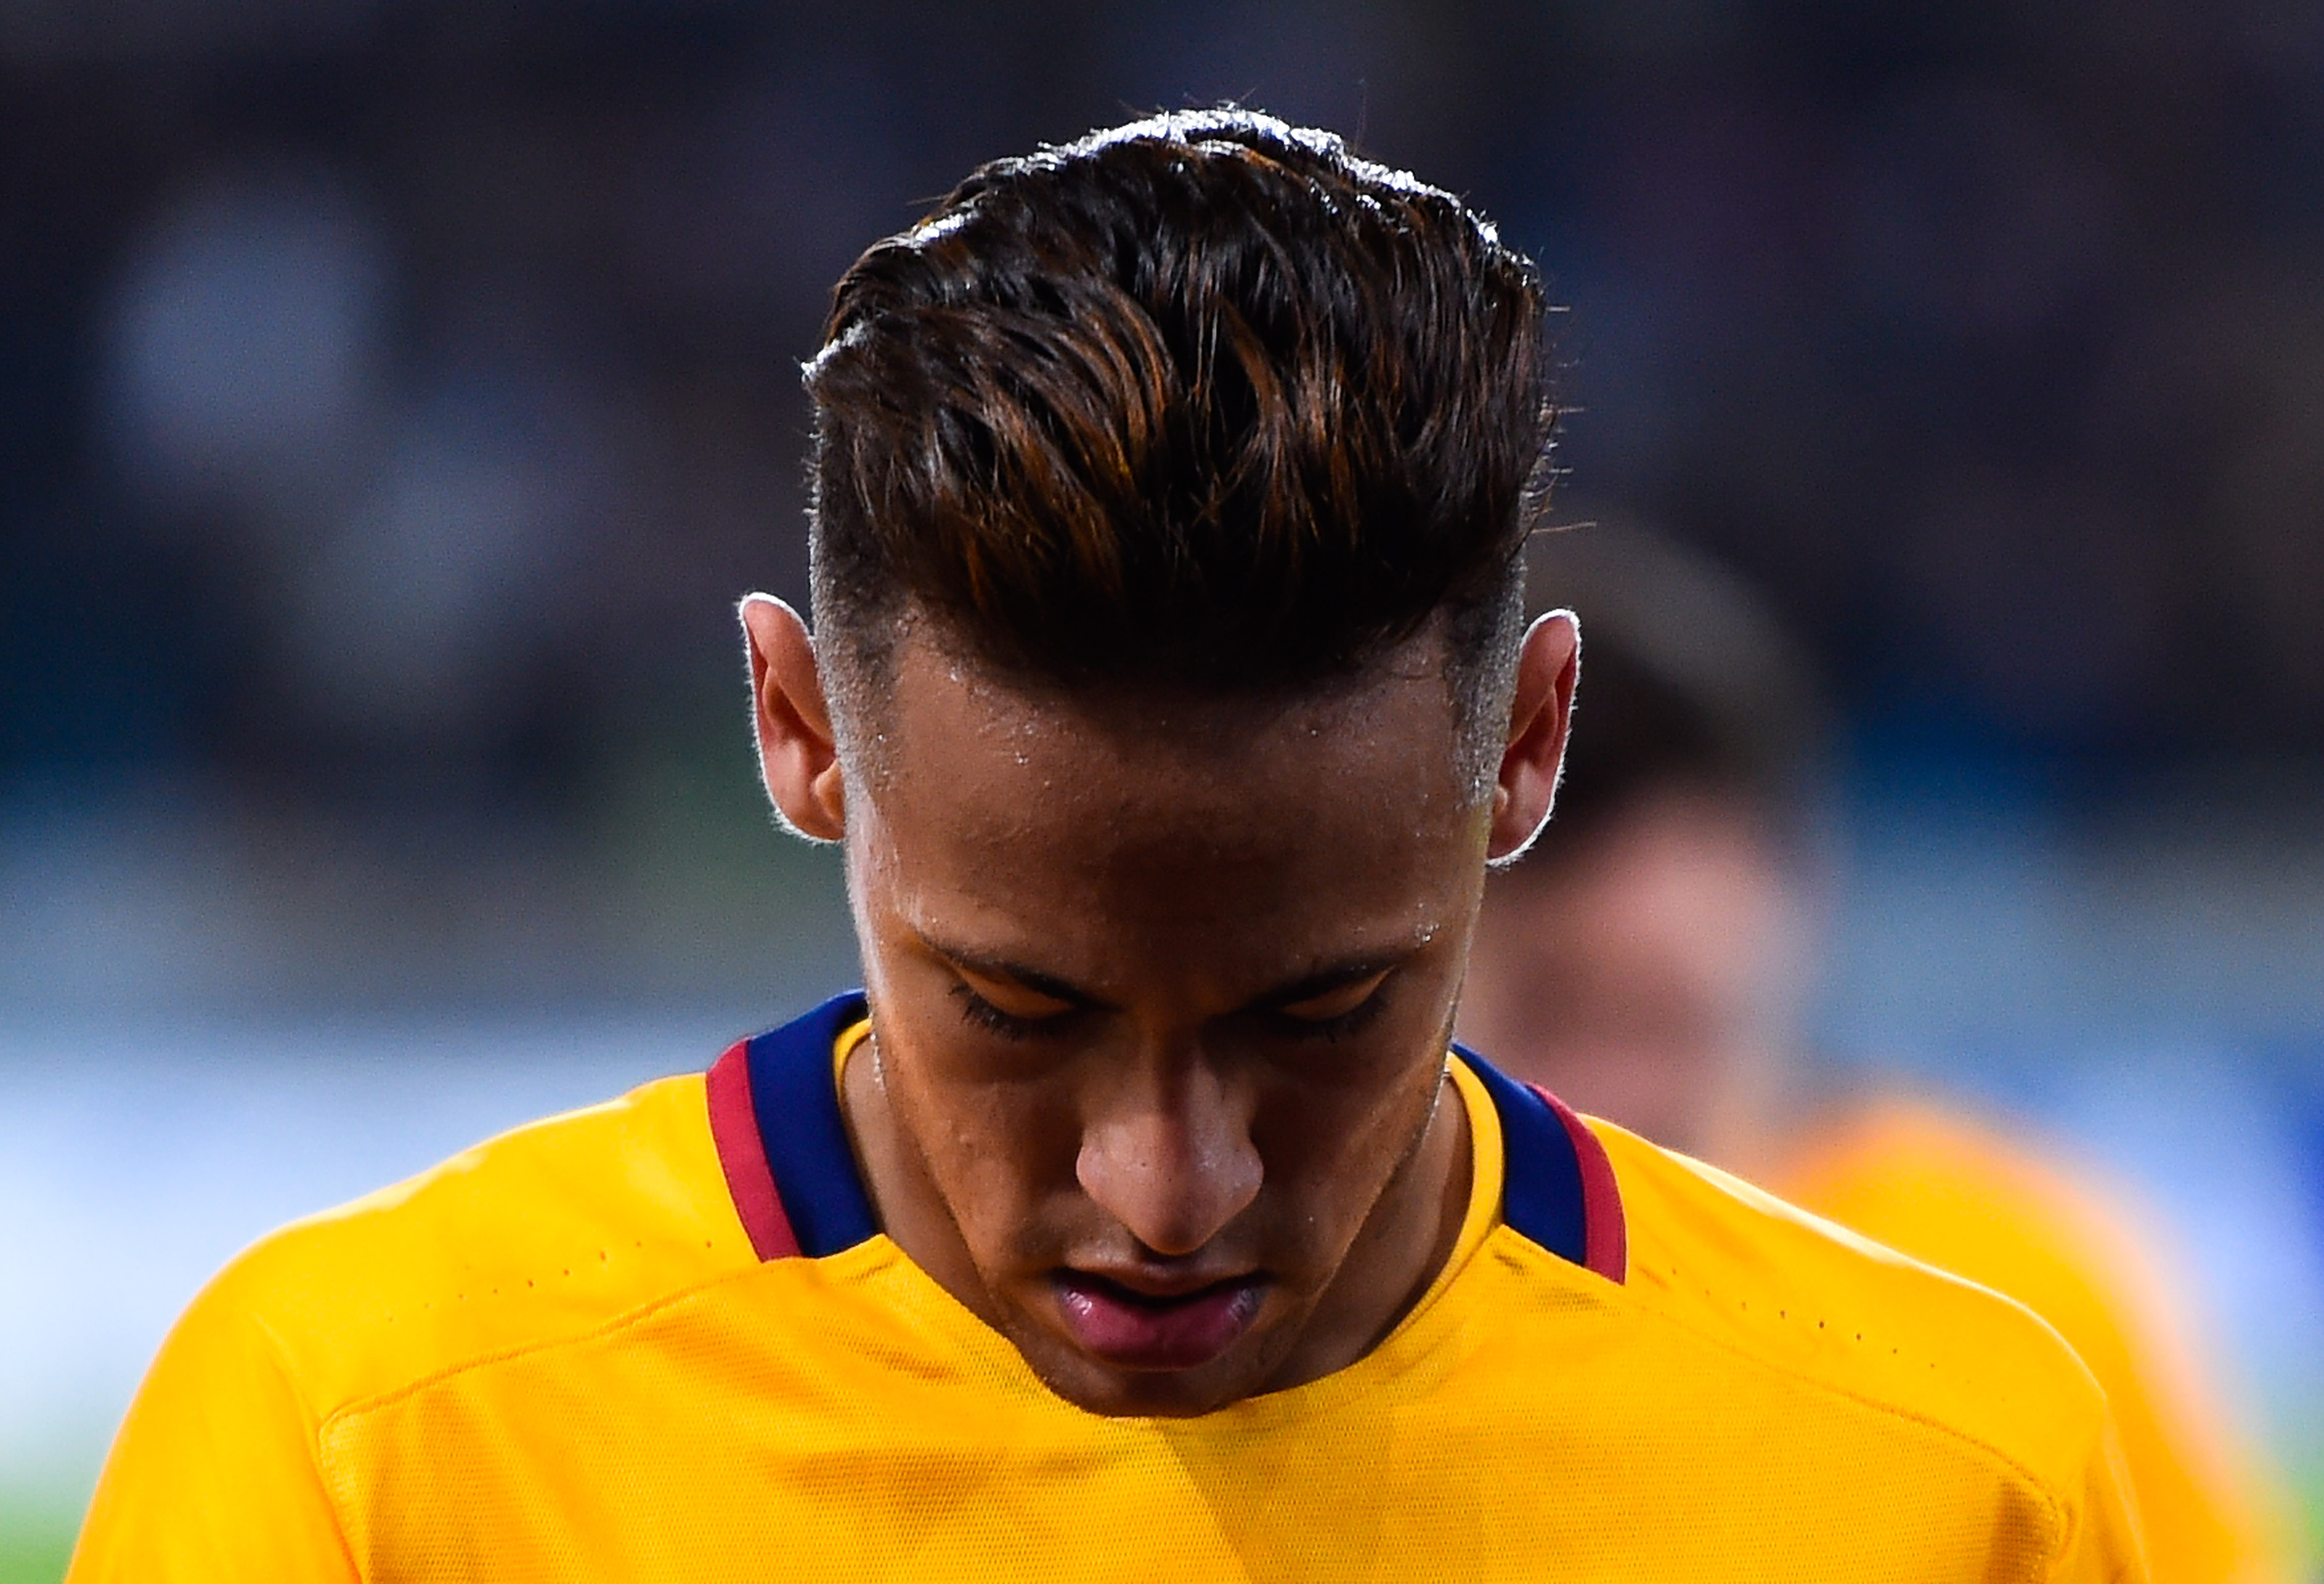 Neymar Jr. current haircut & hairstyle for season 2018 slick back hair Cum  sa te tunzi ca Neymar - YouTube